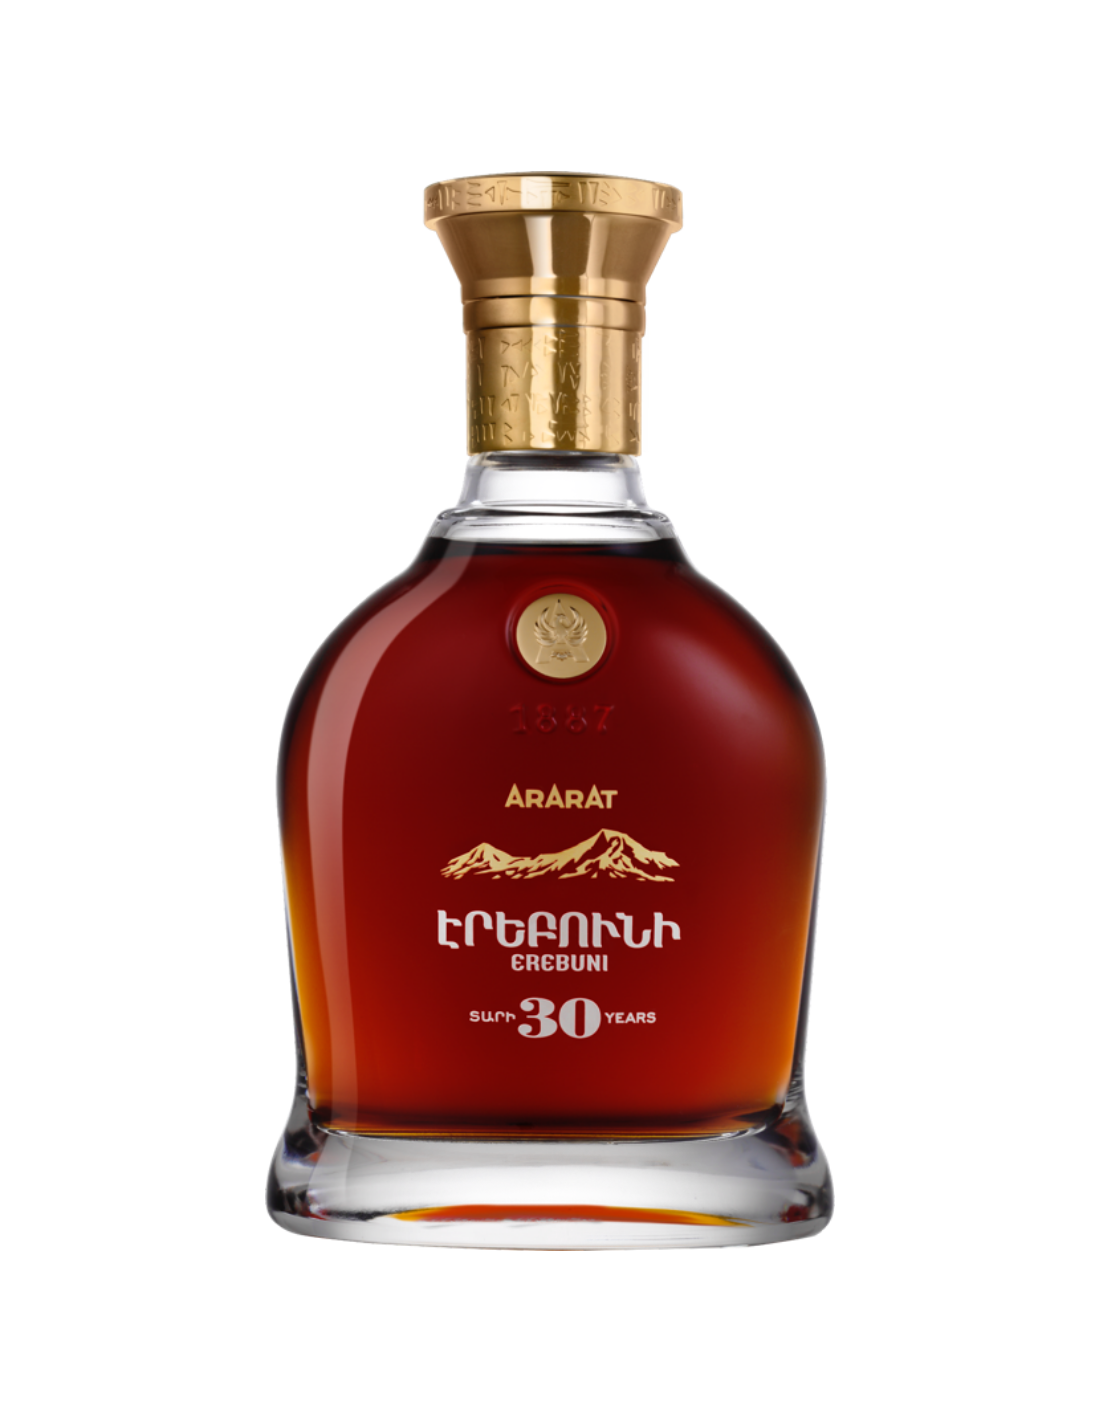 Brandy Ararat Erebuni 30 Years, 40% alc., 0.7L, Armenia alcooldiscount.ro